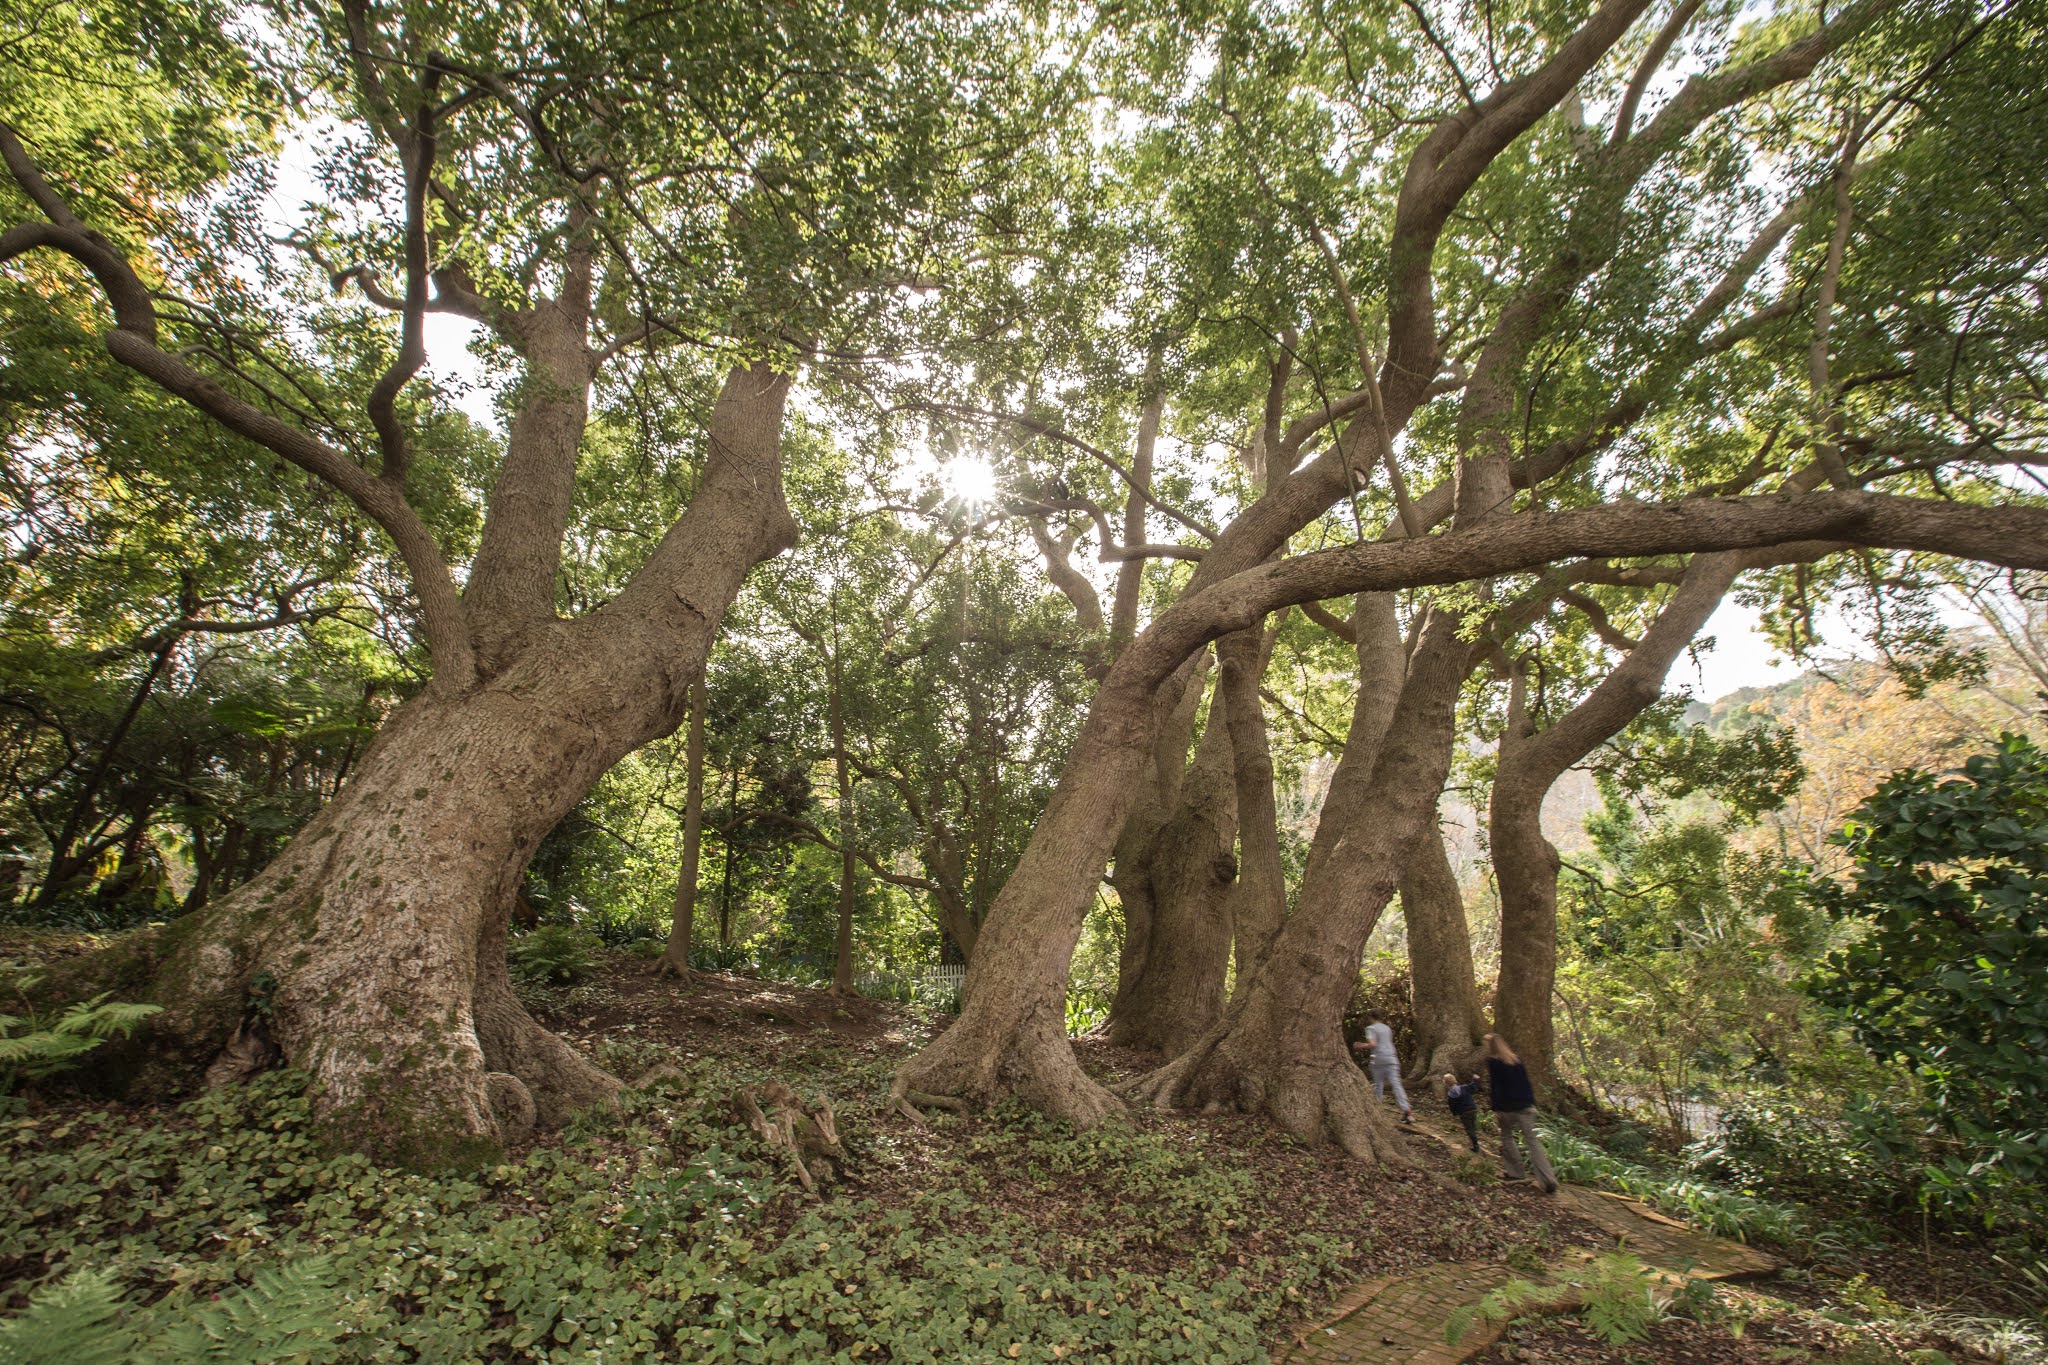 Cellars-Hohenort, Camphor Tree Grove, Champion Trees, Cape Town, Photo of camphor tree, Alex Aitkenhead, Constantia